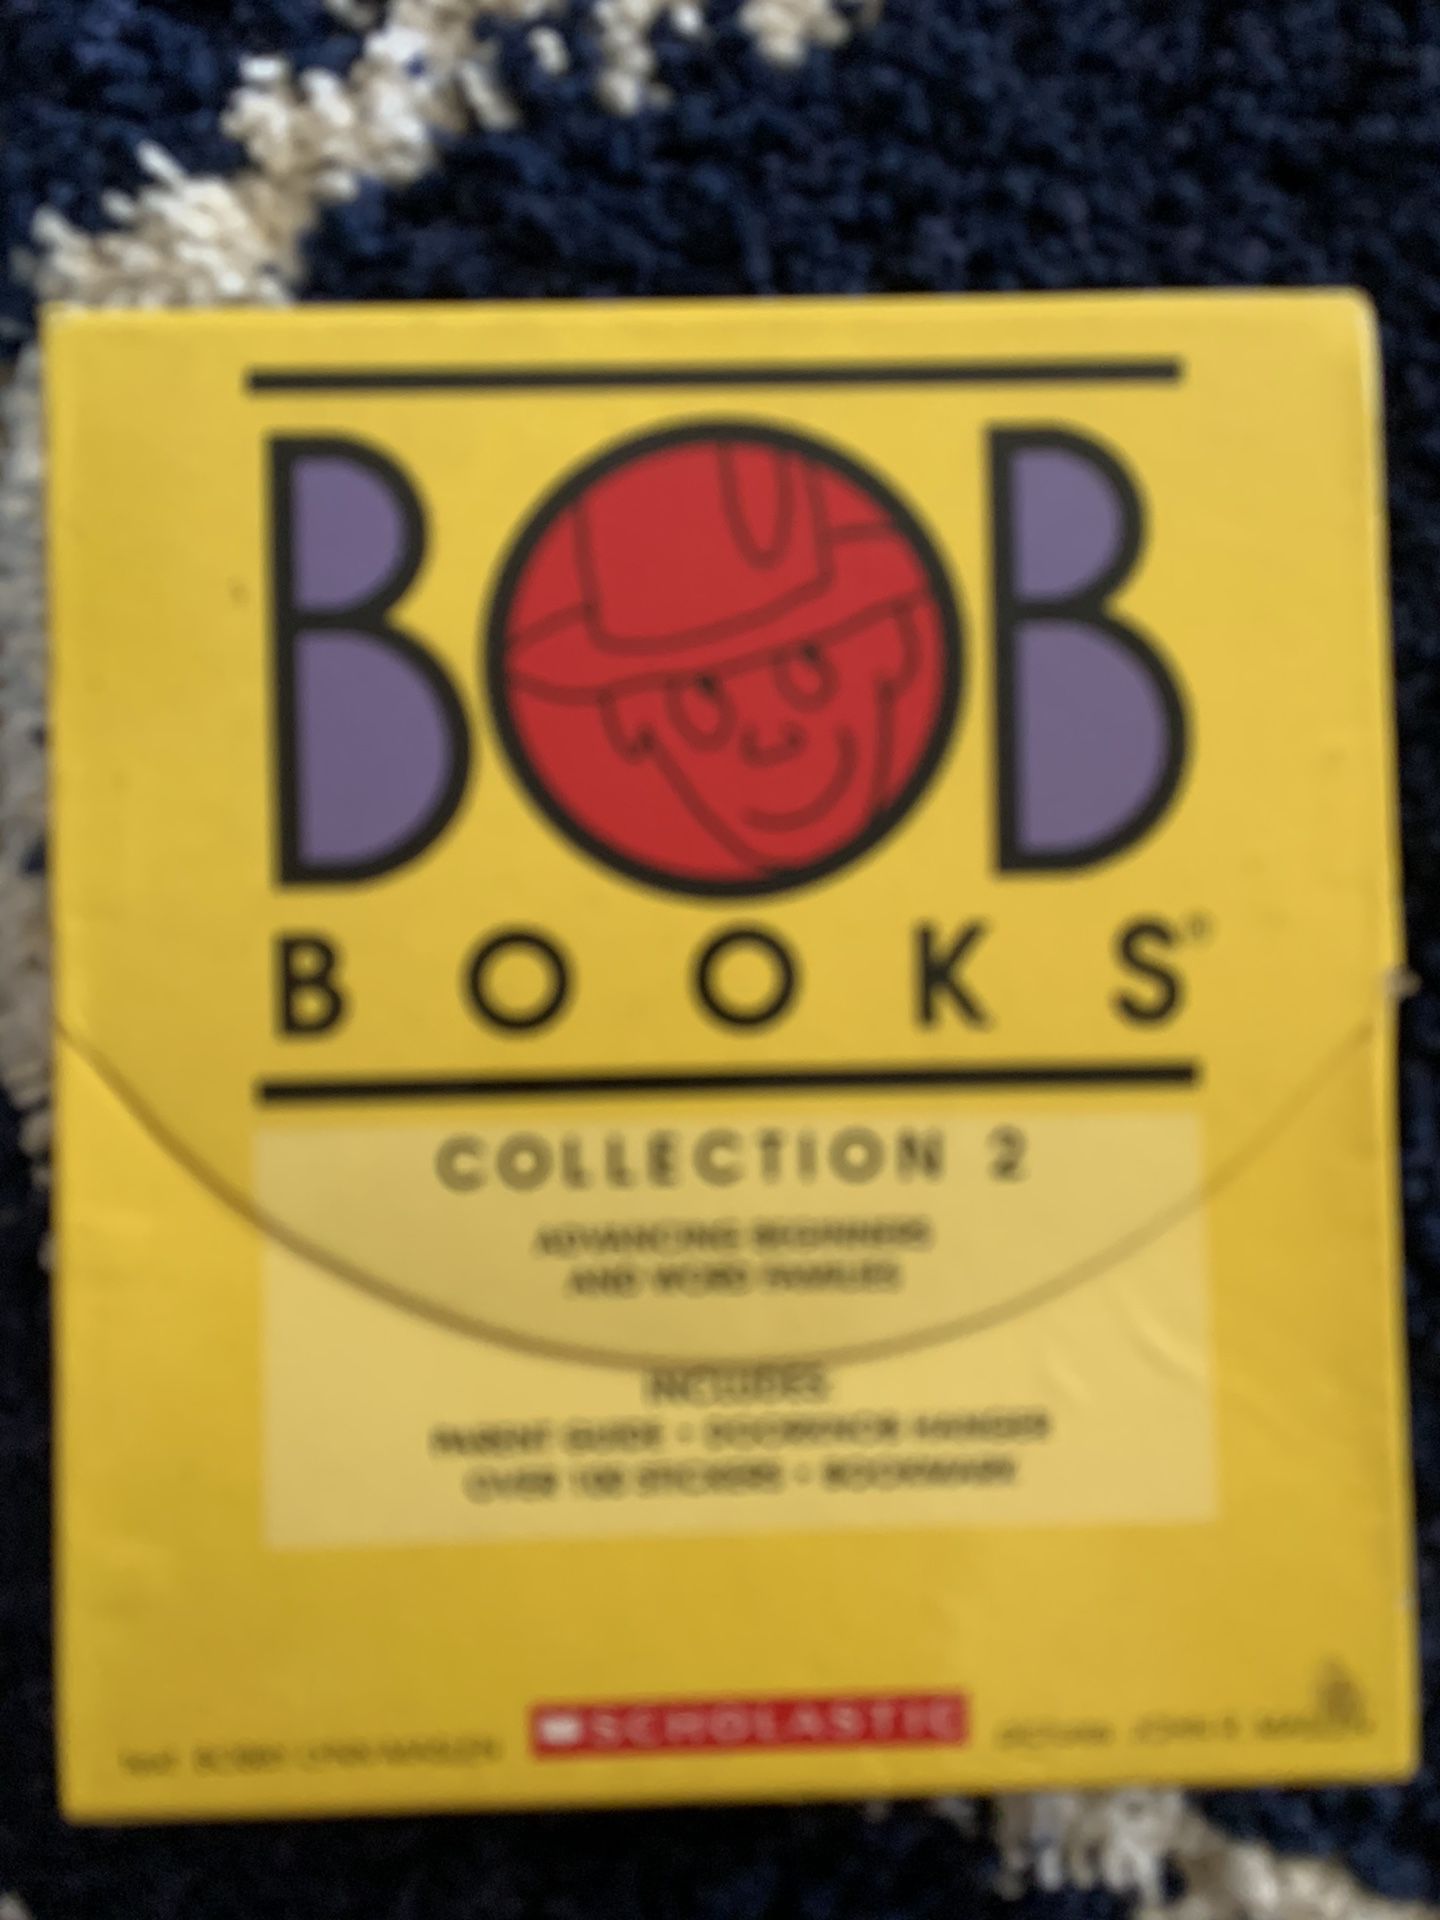 Bob books collection 2 - 16 books in set